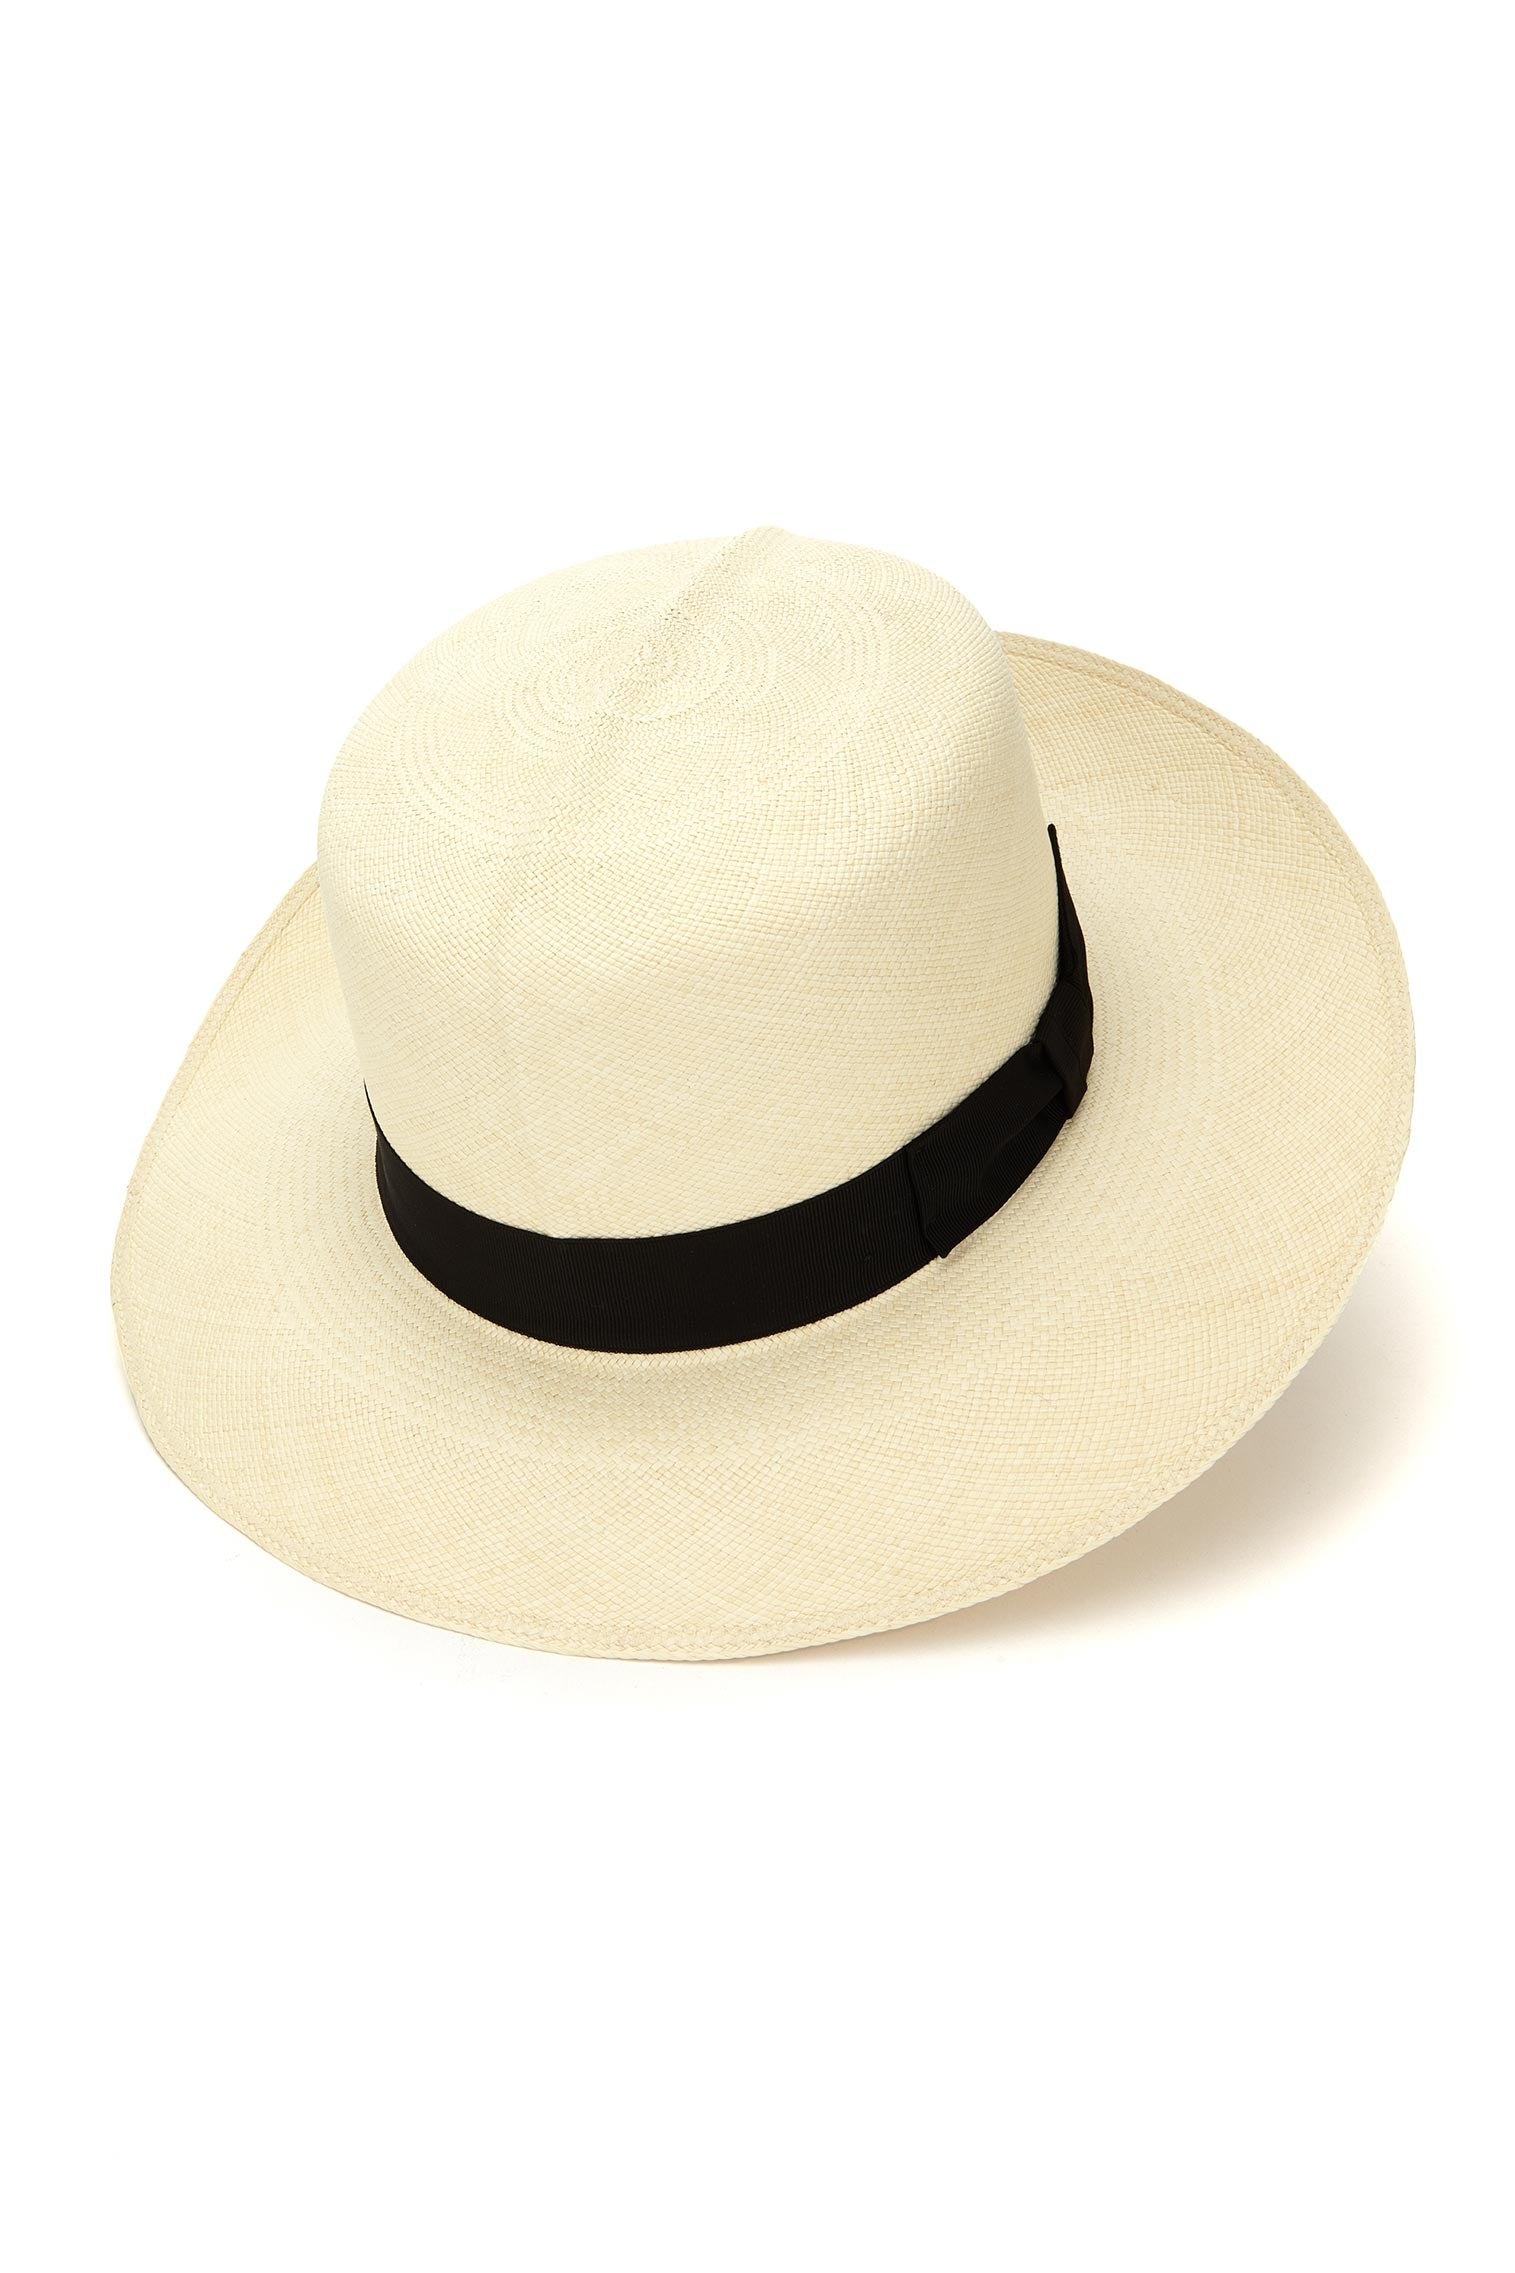 Rollable Superfino Montecristi Panama - Men's Packable & Rollable Hats - Lock & Co. Hatters London UK